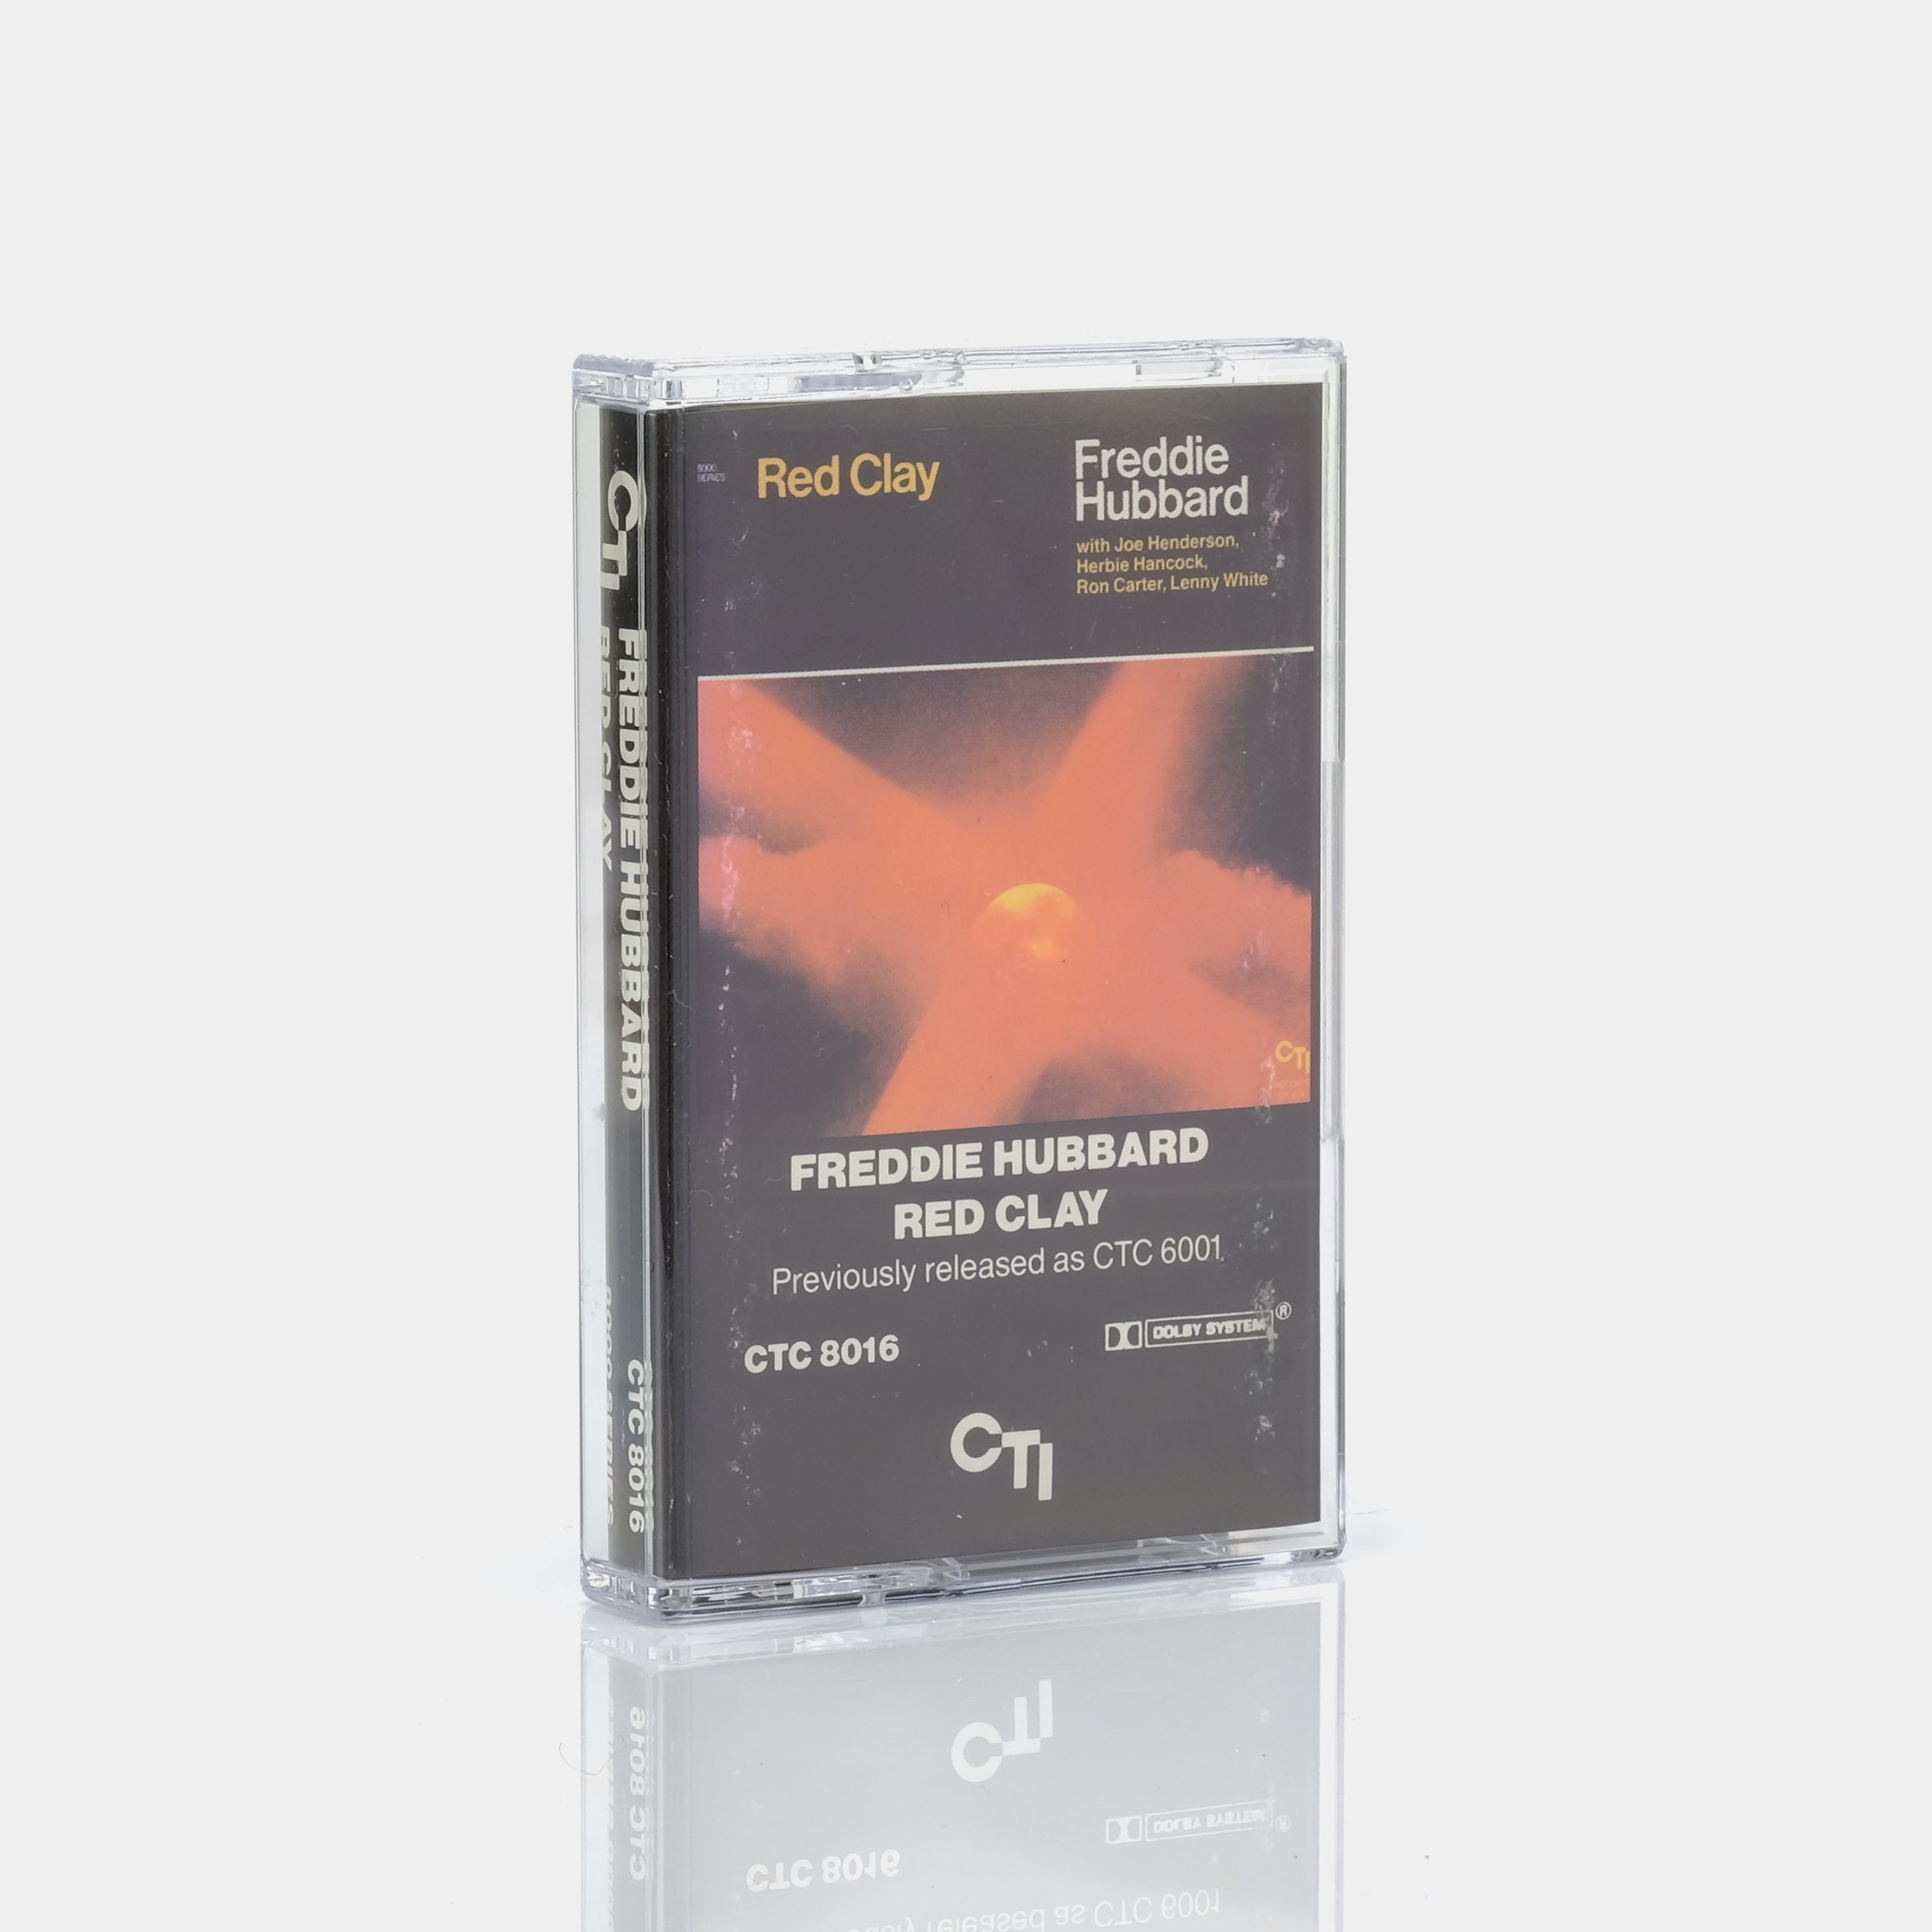 Freddie Hubbard - Red Clay Cassette Tape